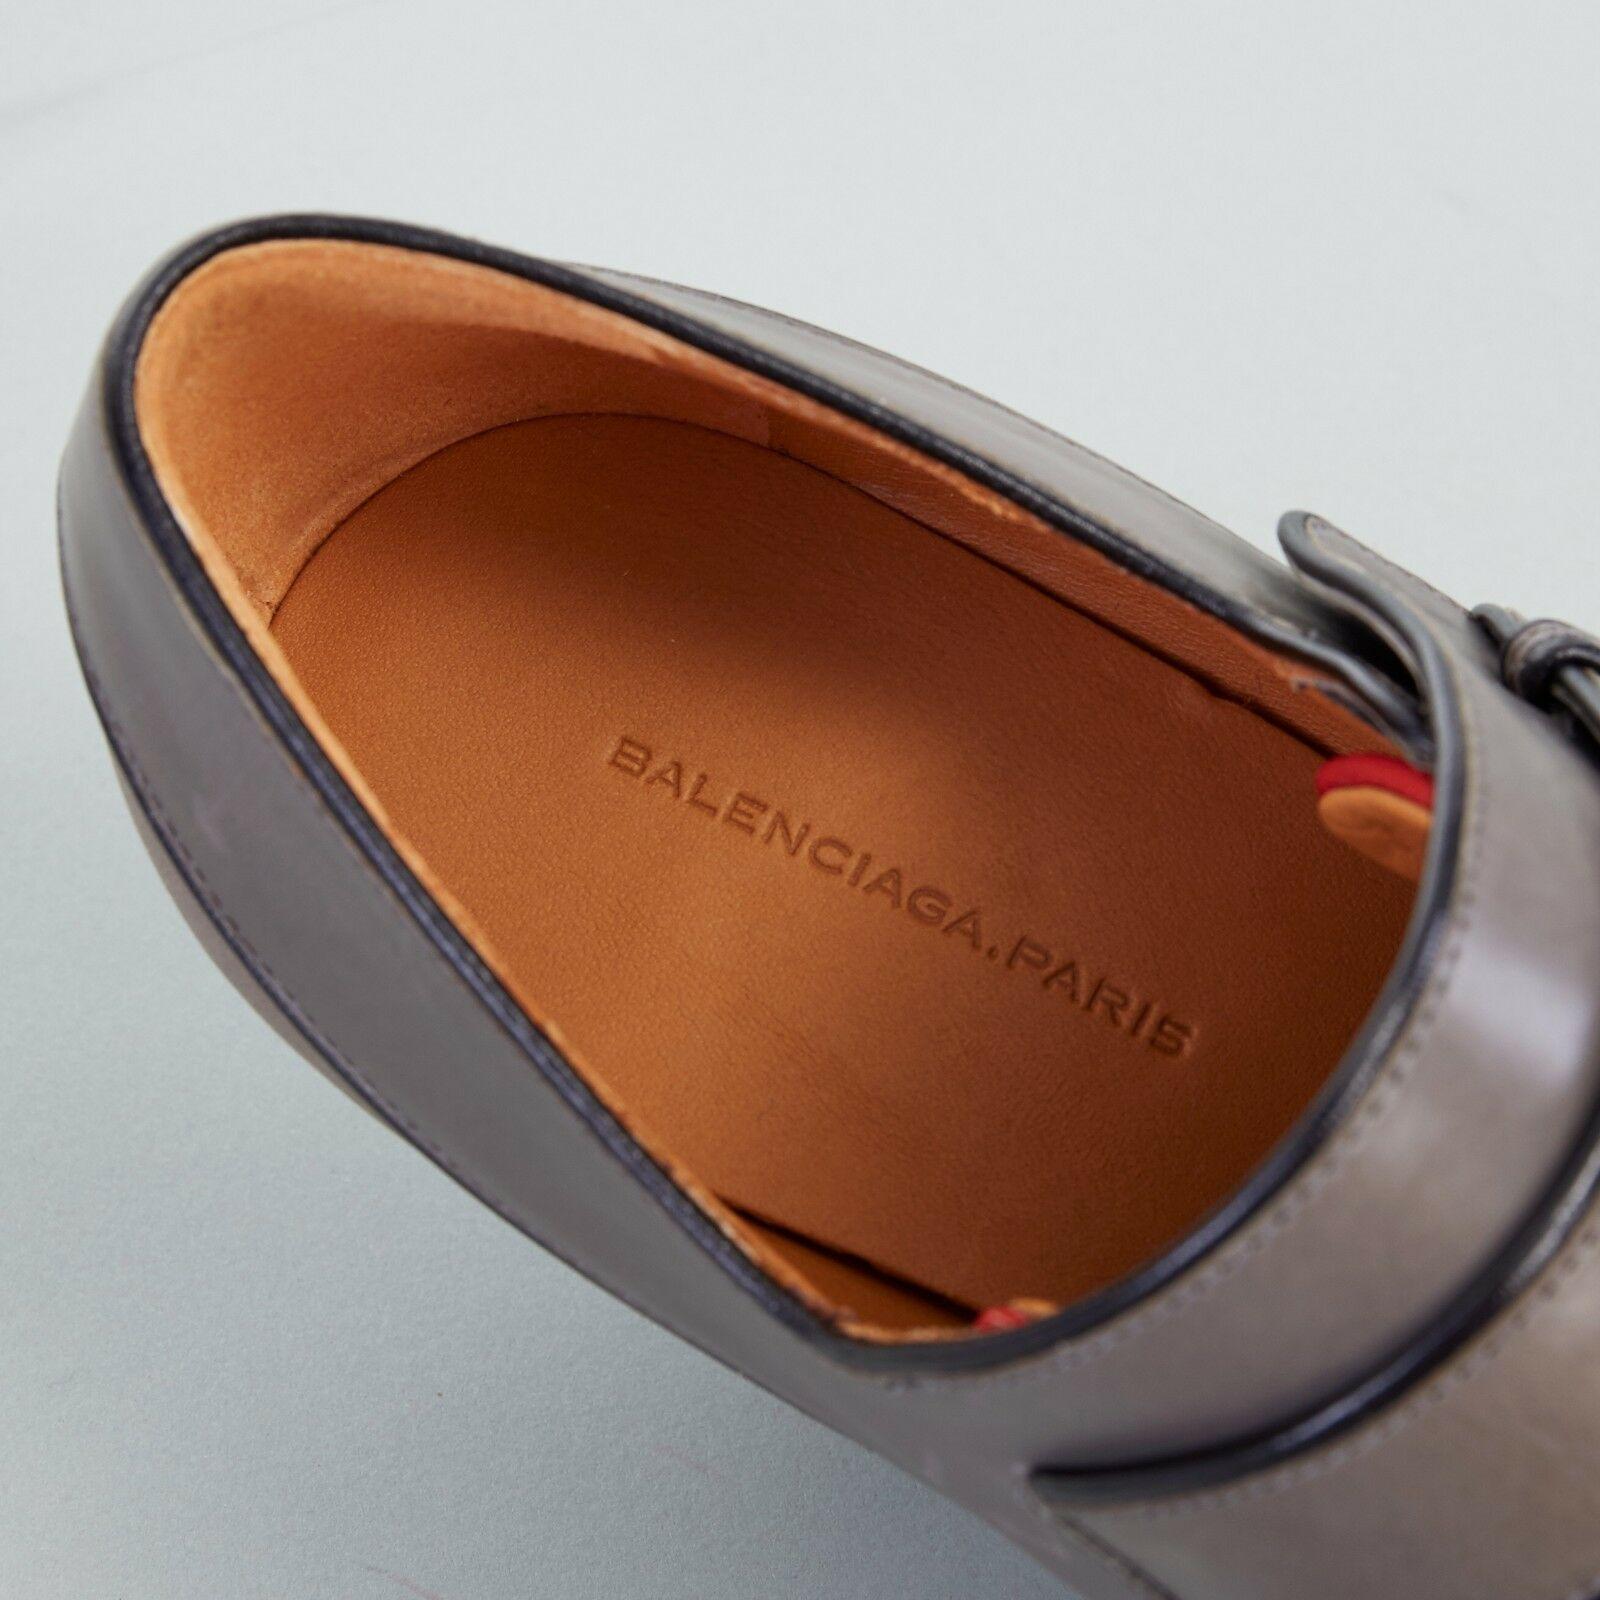 new BALENCIAGA GHESQUIERE AW12 grey orange pointy wedge heel shoes EU38 US8 UK5 3